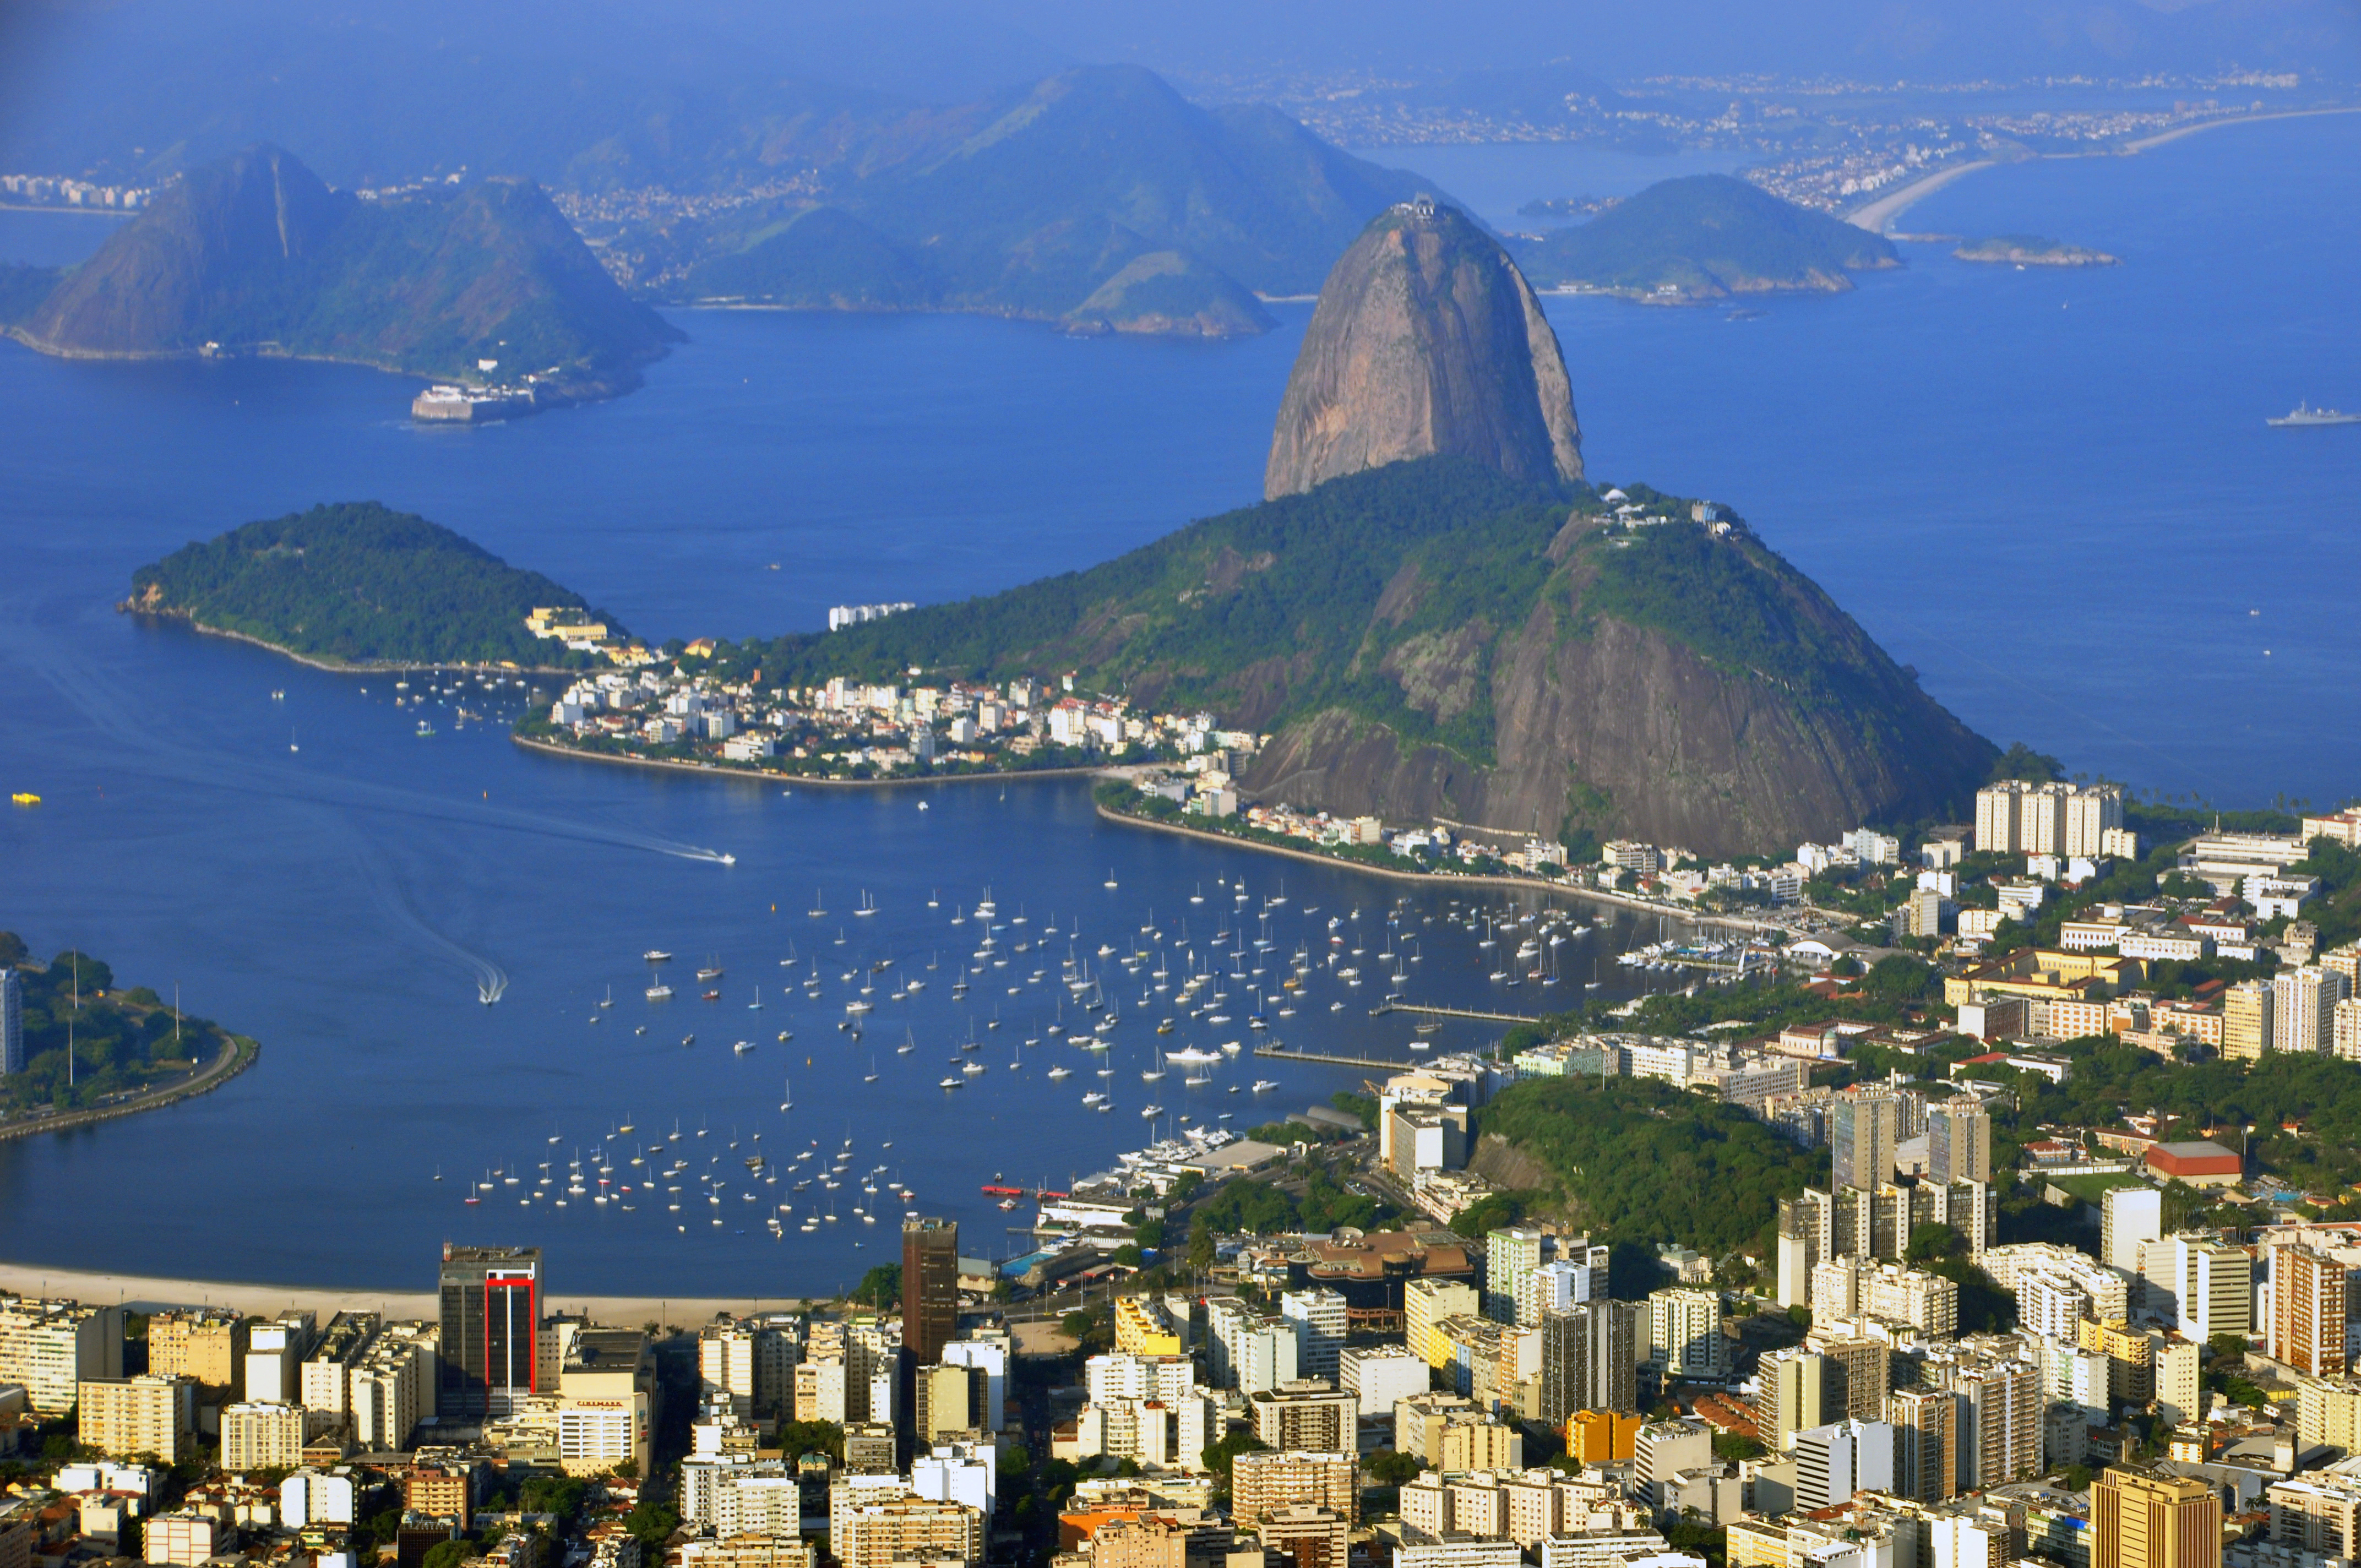 Rio de Janeiro – Travel guide at Wikivoyage